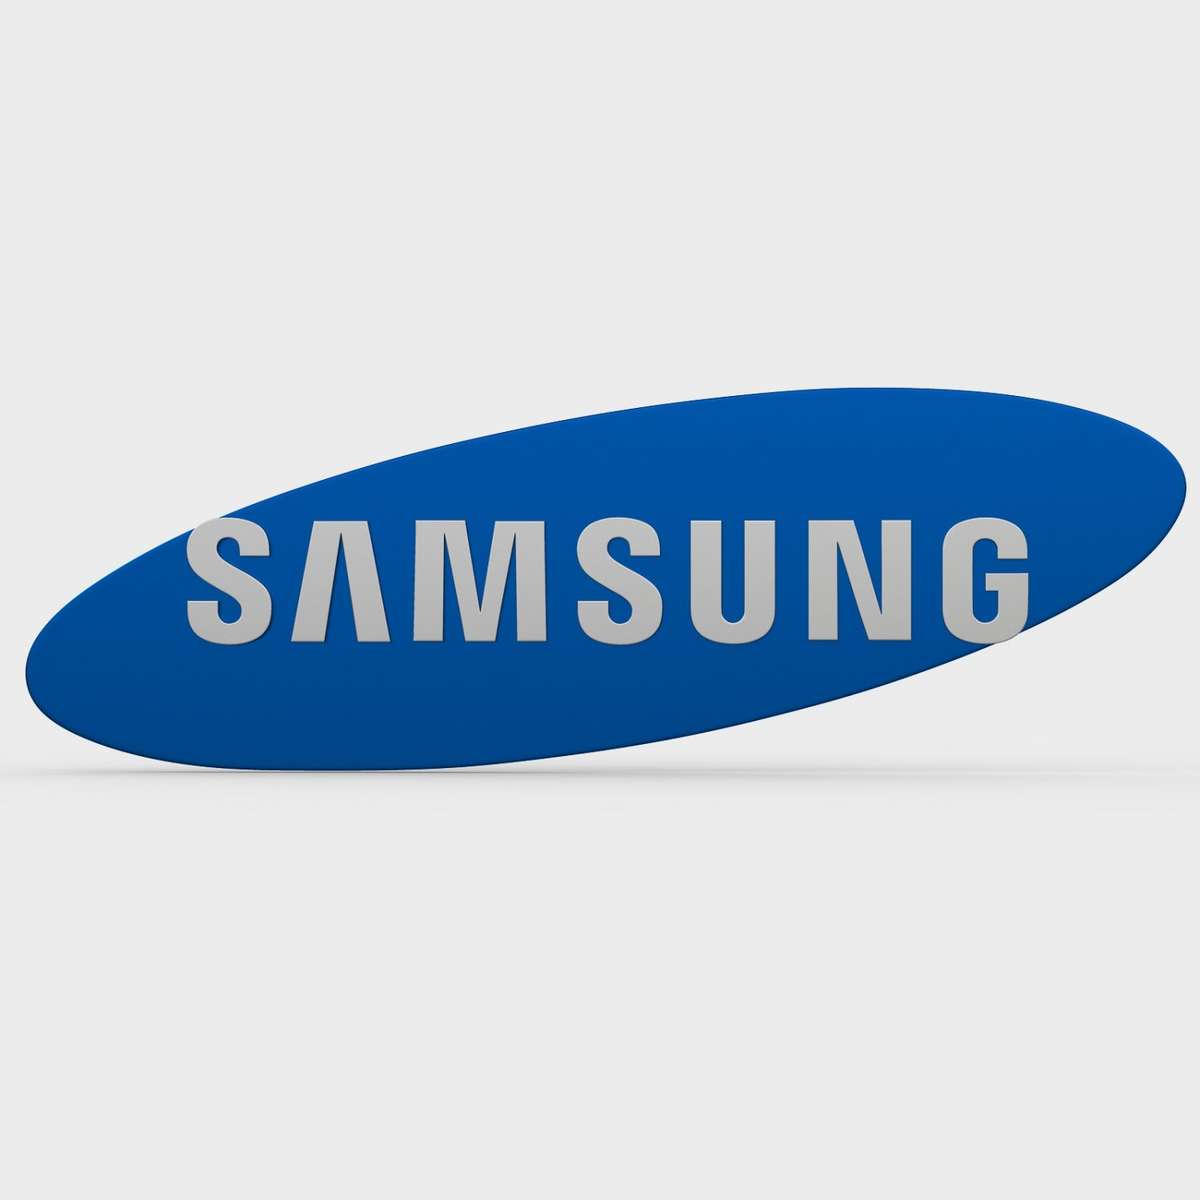 вікторина з логотипом samsung скласти пазл онлайн з фото